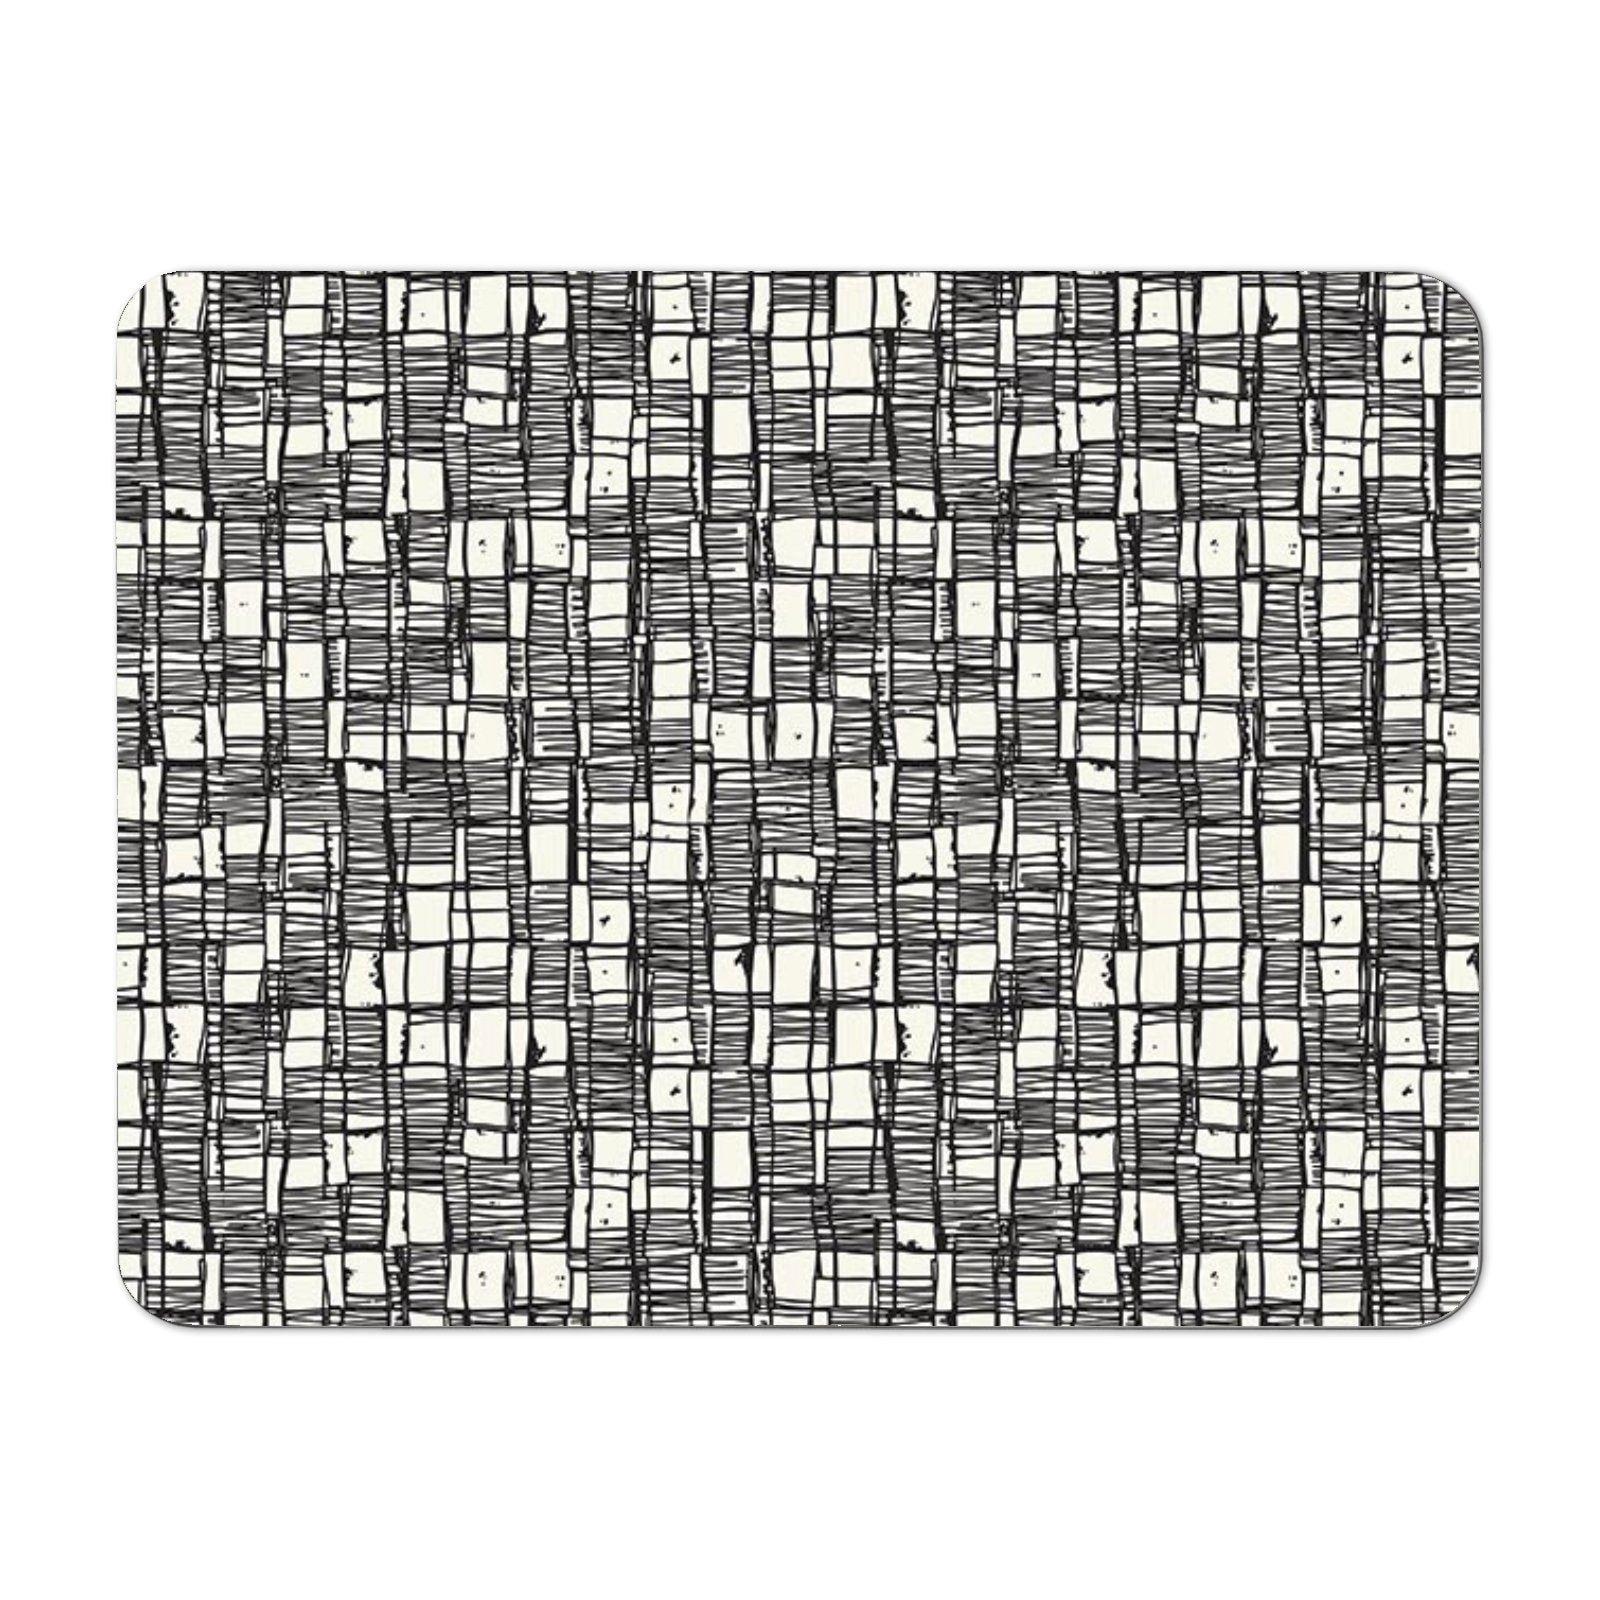 Irregular Sketched Block Textured  Placemats